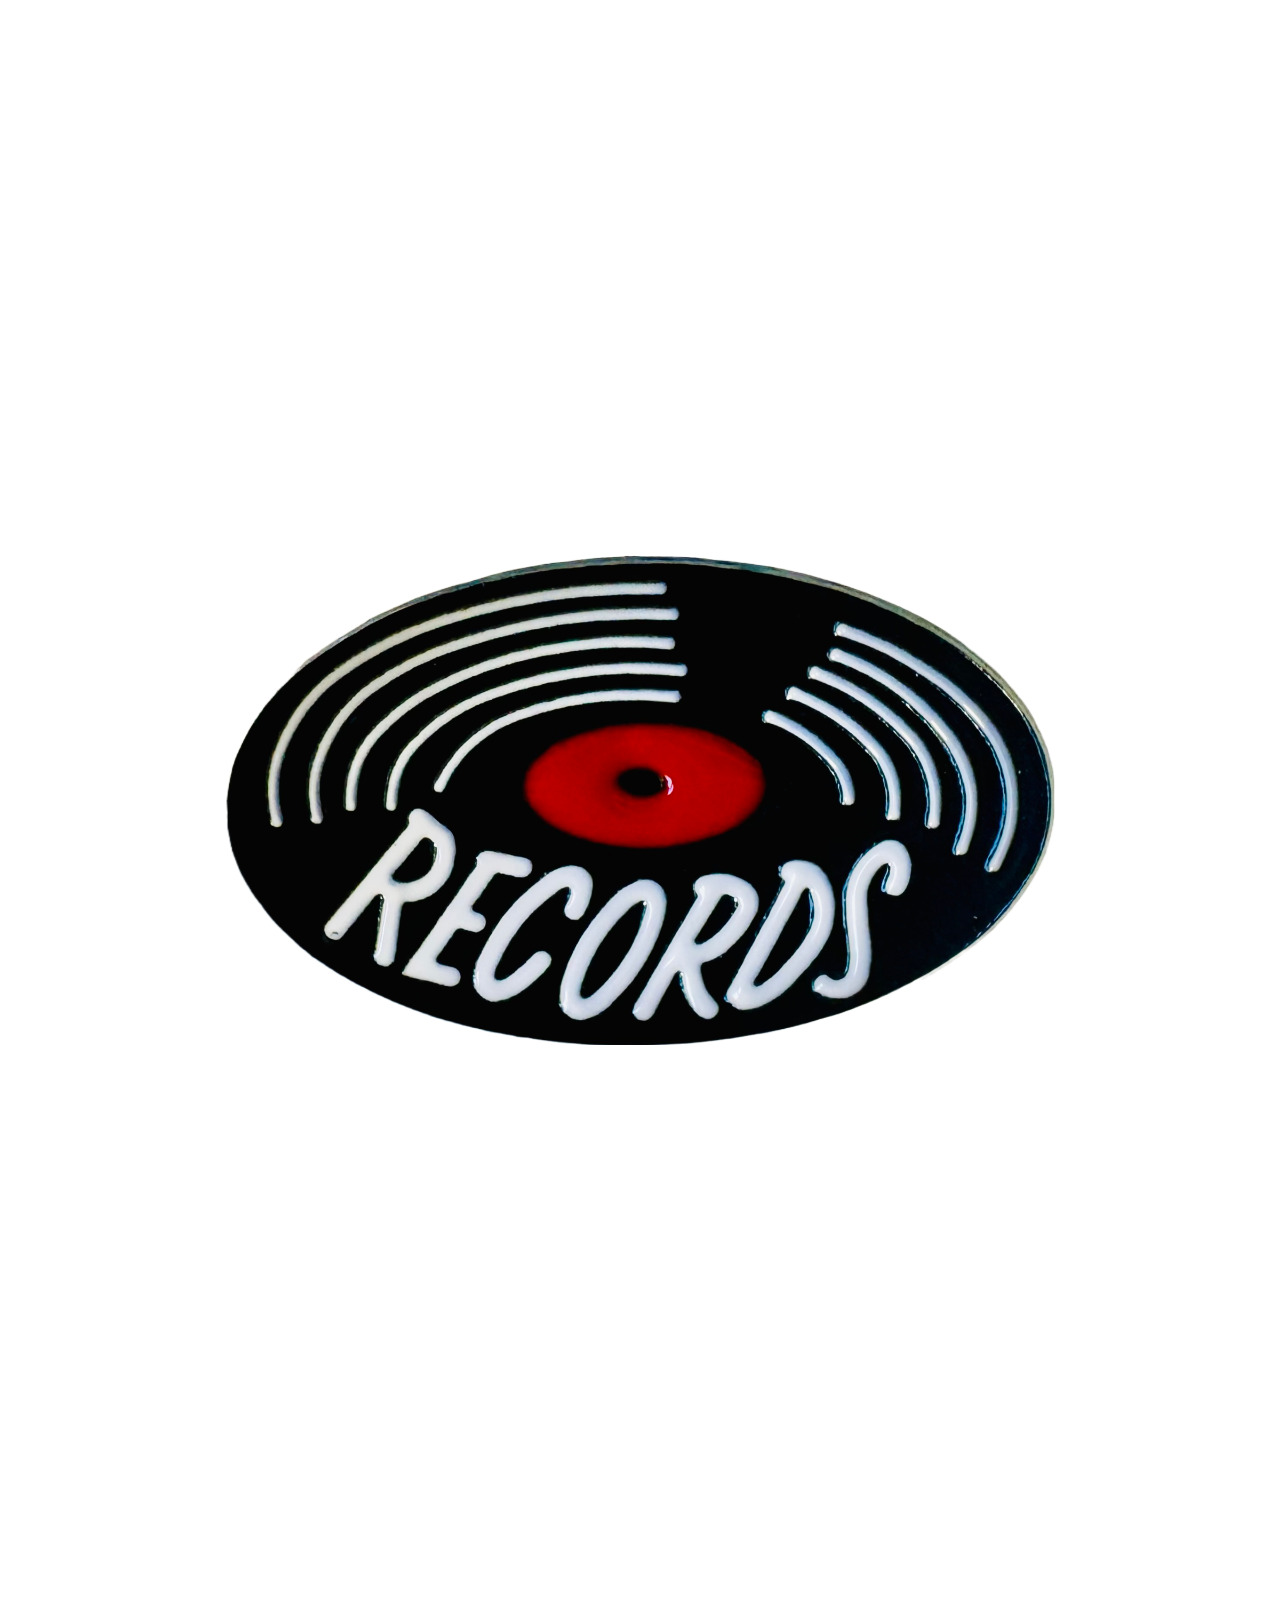 Vinyl Record enamel pin - crate digger, vinyl junkie, record collector, records